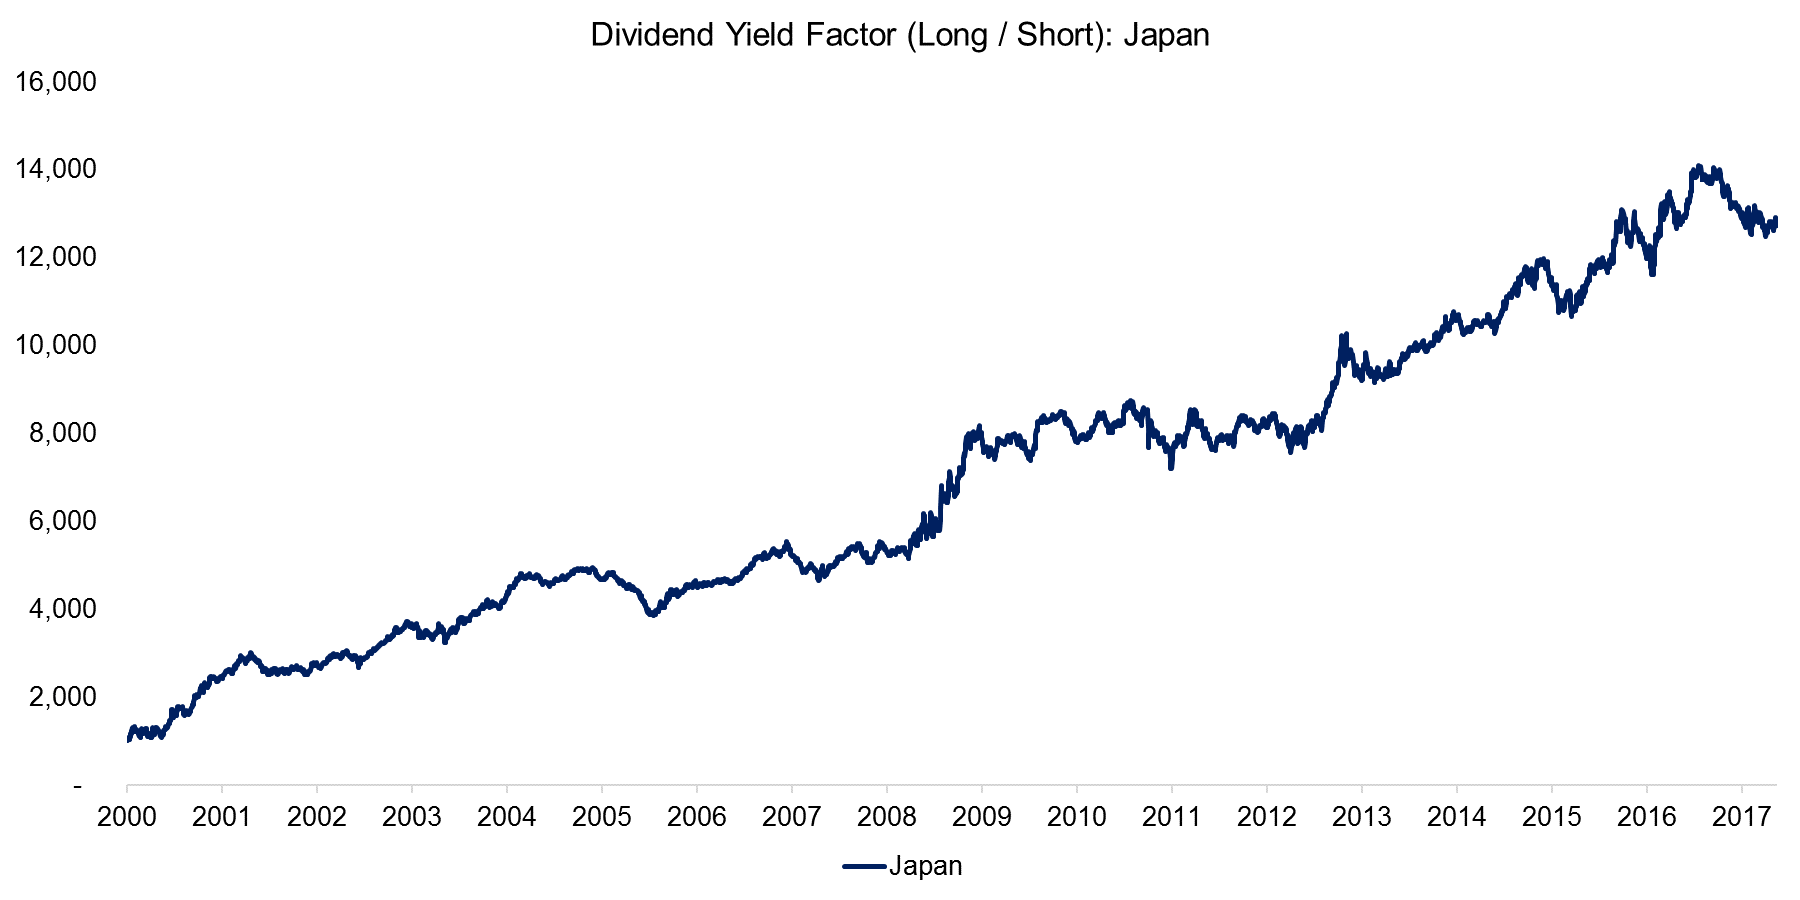 Dividend Yield Factor (Long Short) Japan